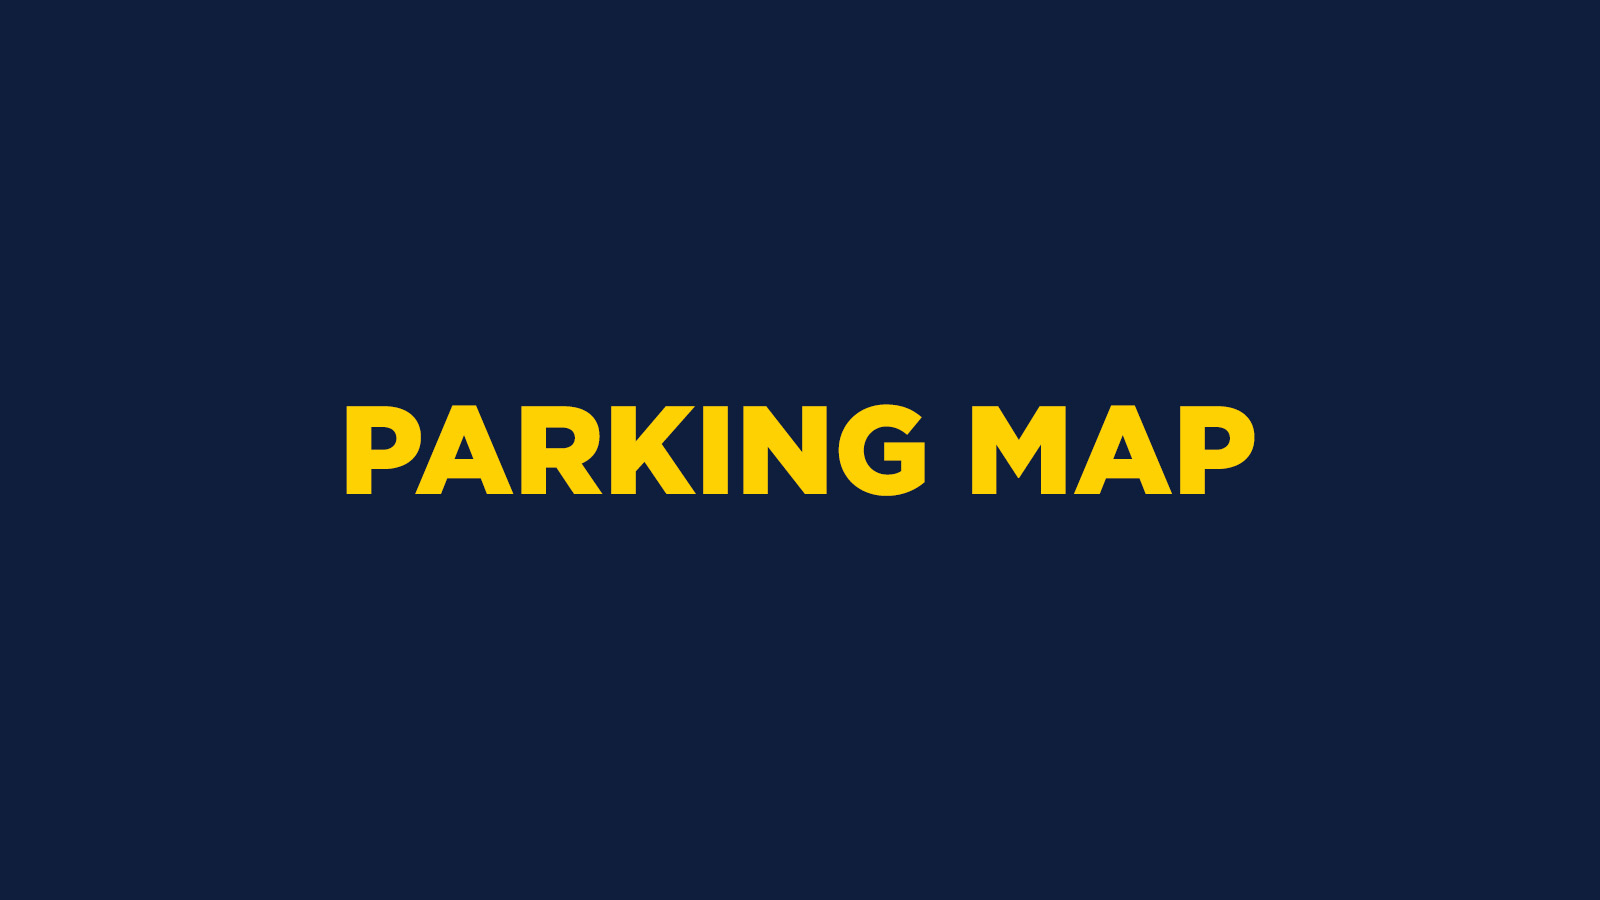 PARKING MAP